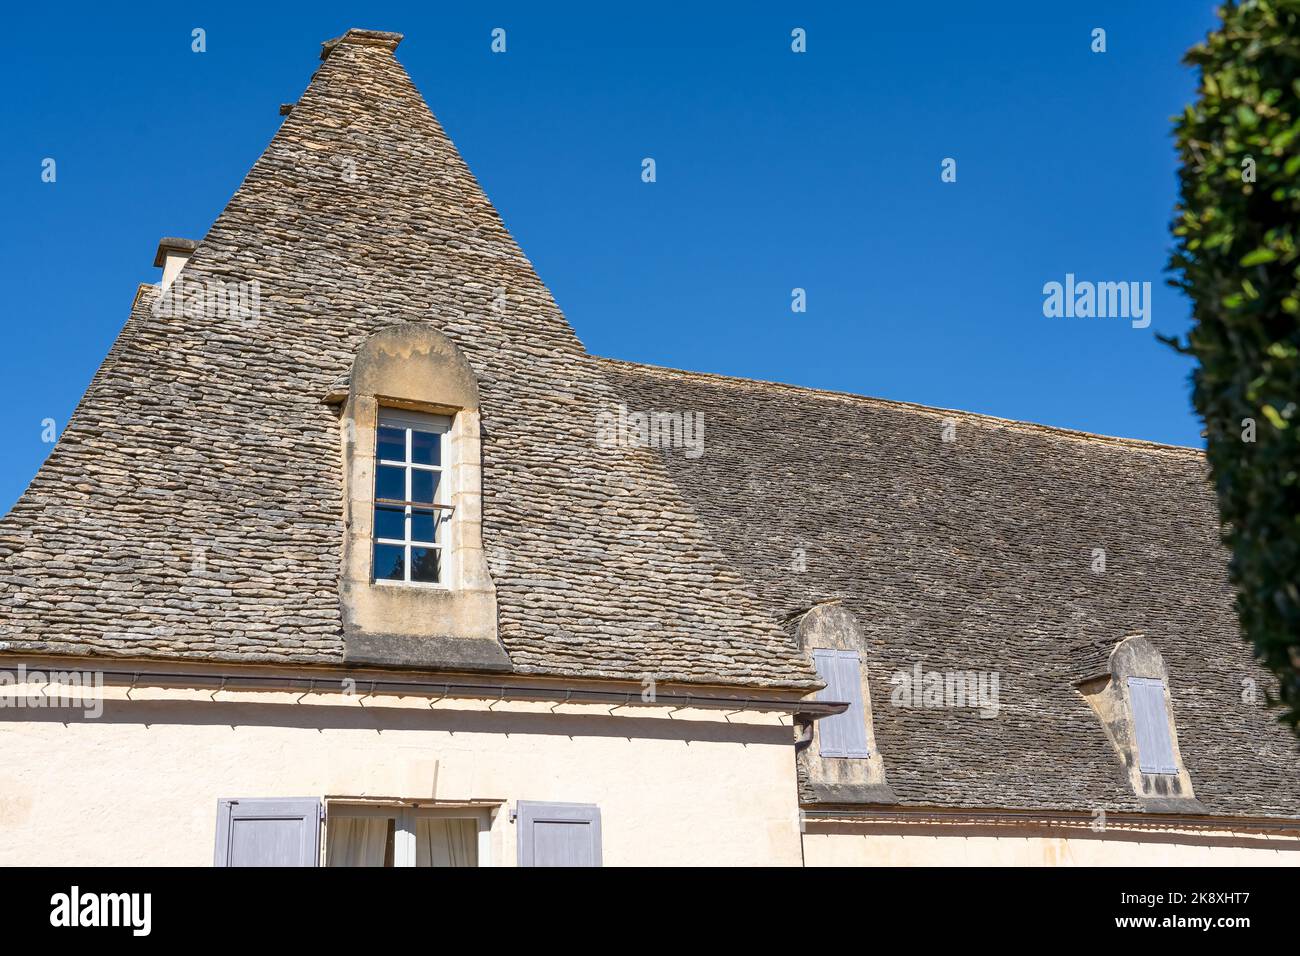 The Marqueyssac Chateau (Les Jardins de Marqueyssac) aged roof with hand cut stone tiles, clear blue sky, Dordogne France Stock Photo